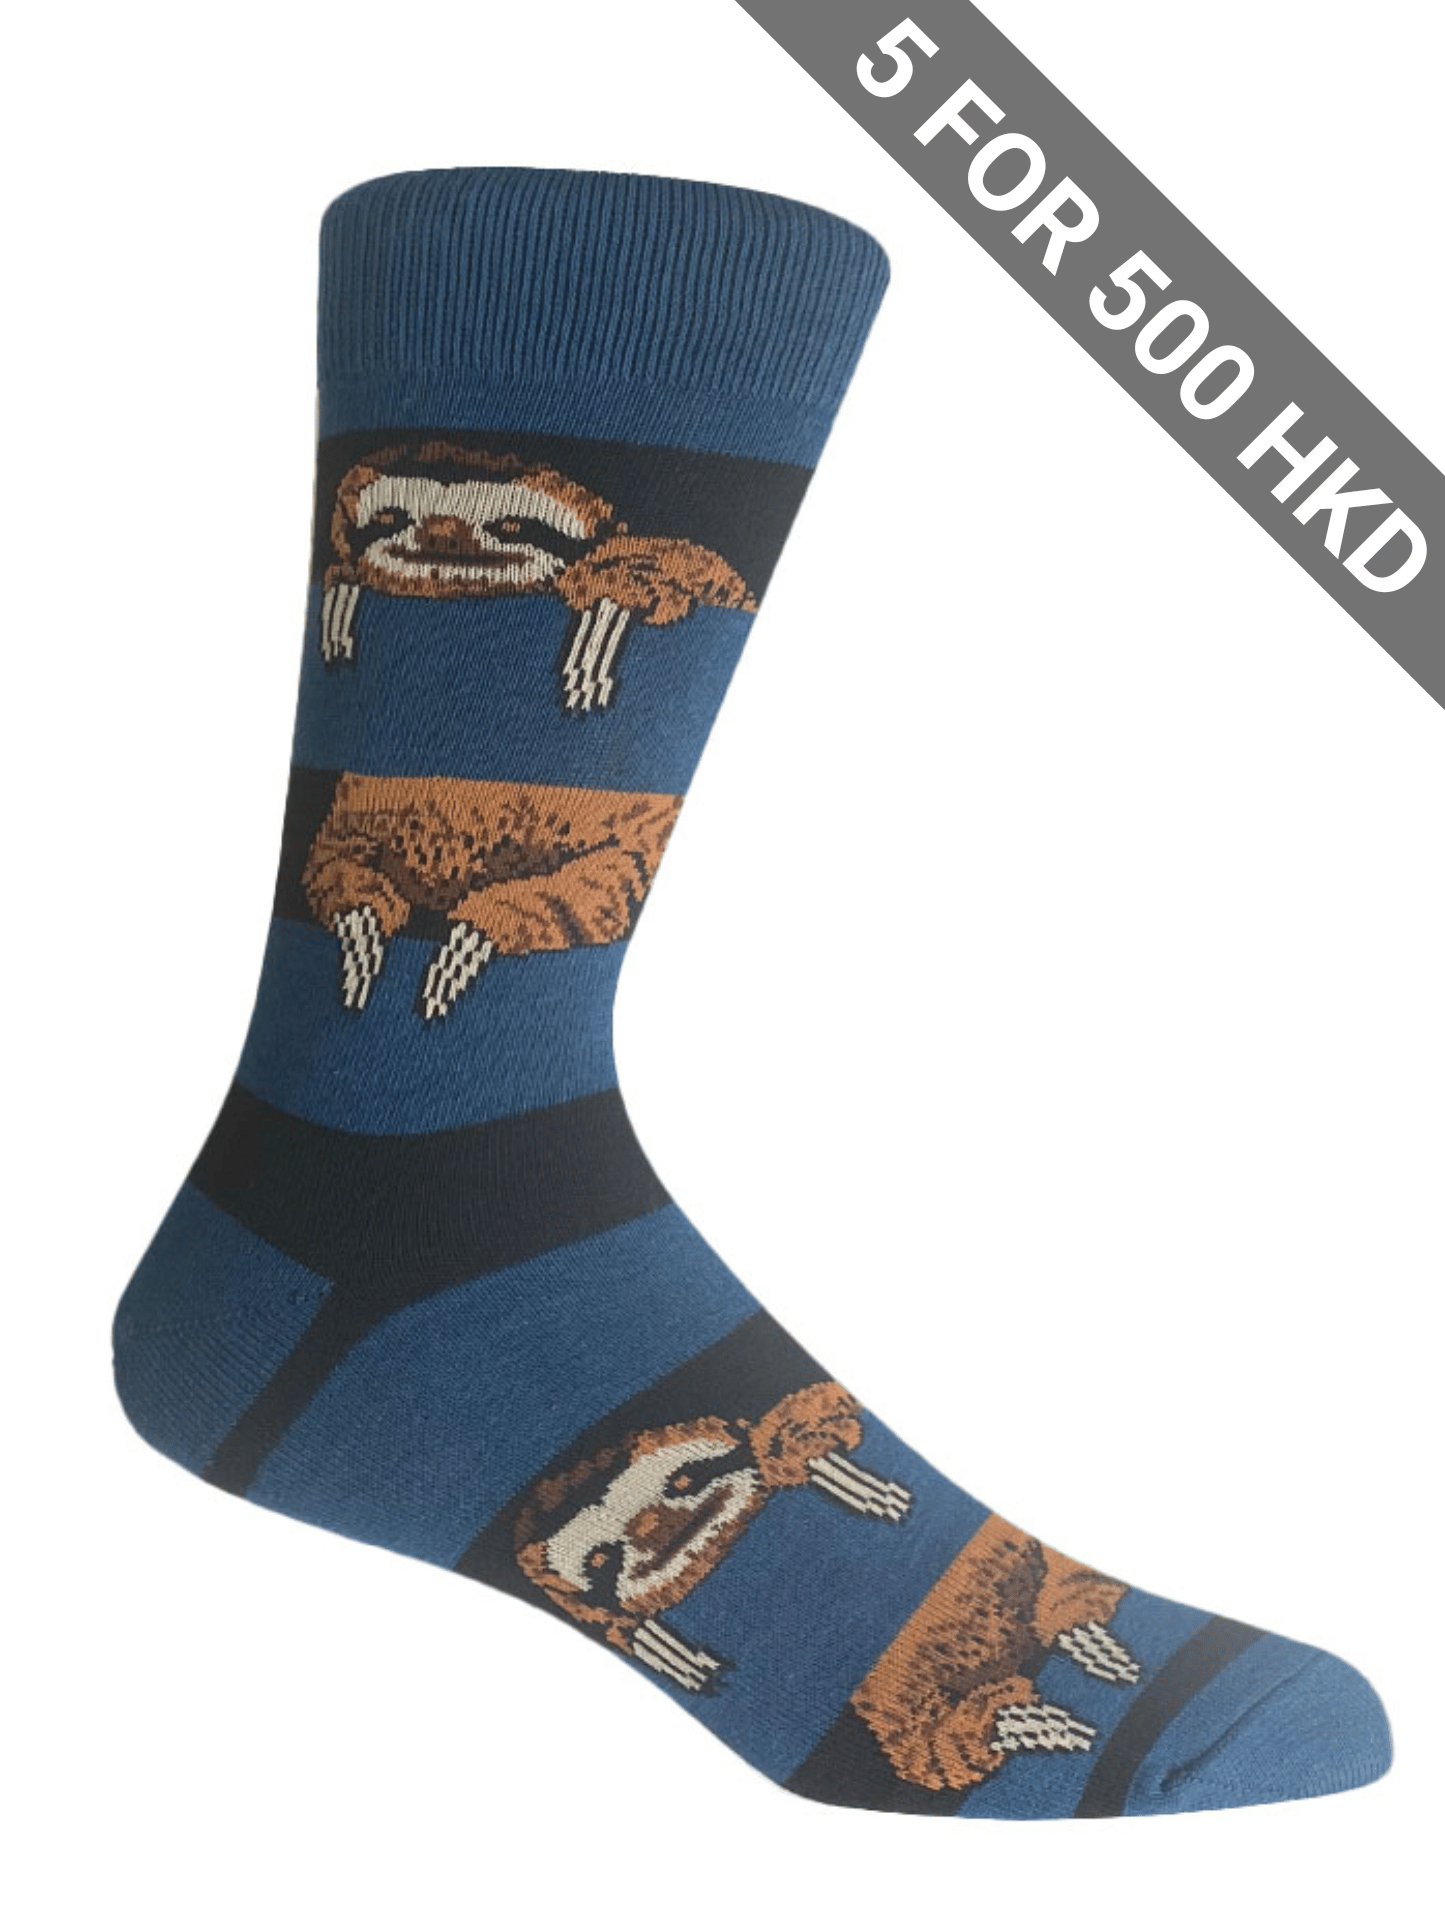 Socks | Blue Black | Sloth | Cotton